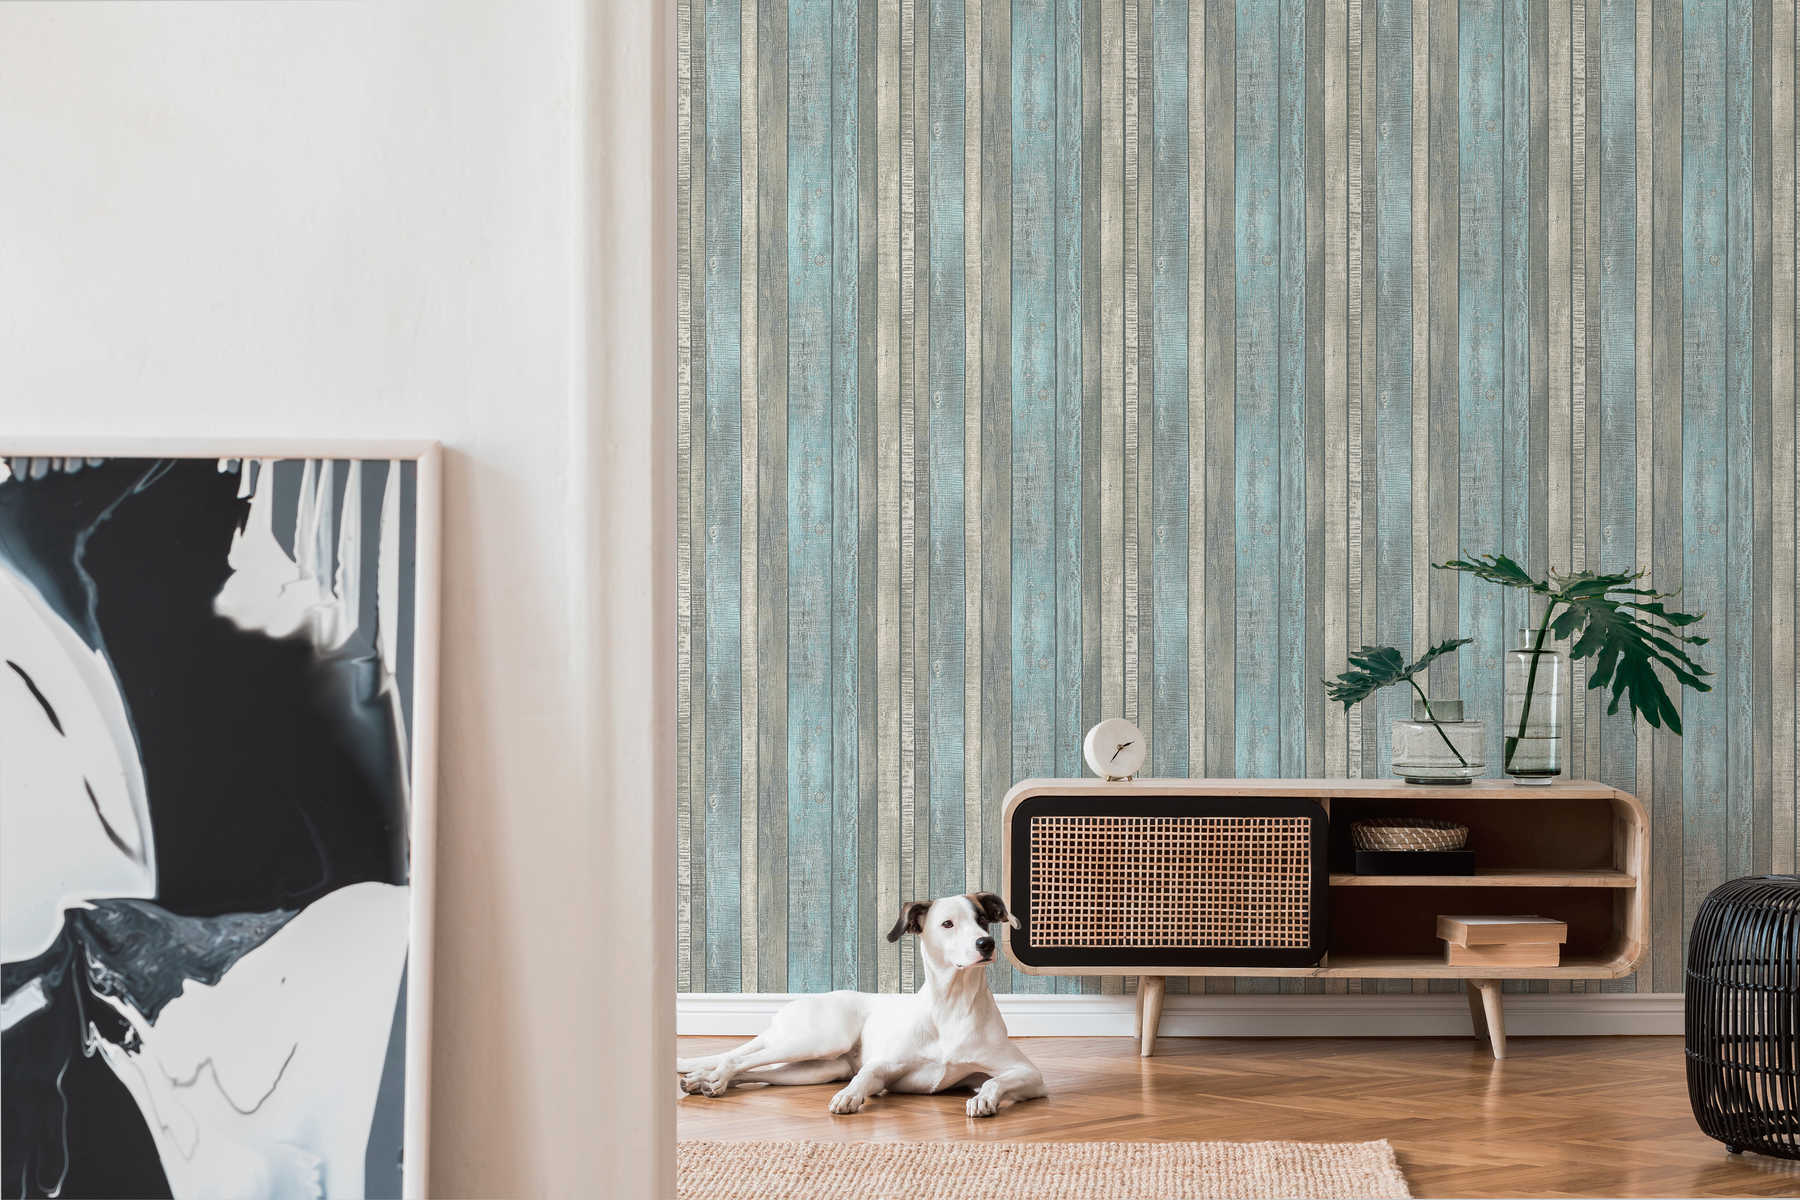             Wood look wallpaper with boards & rustic grain - blue, grey, cream
        